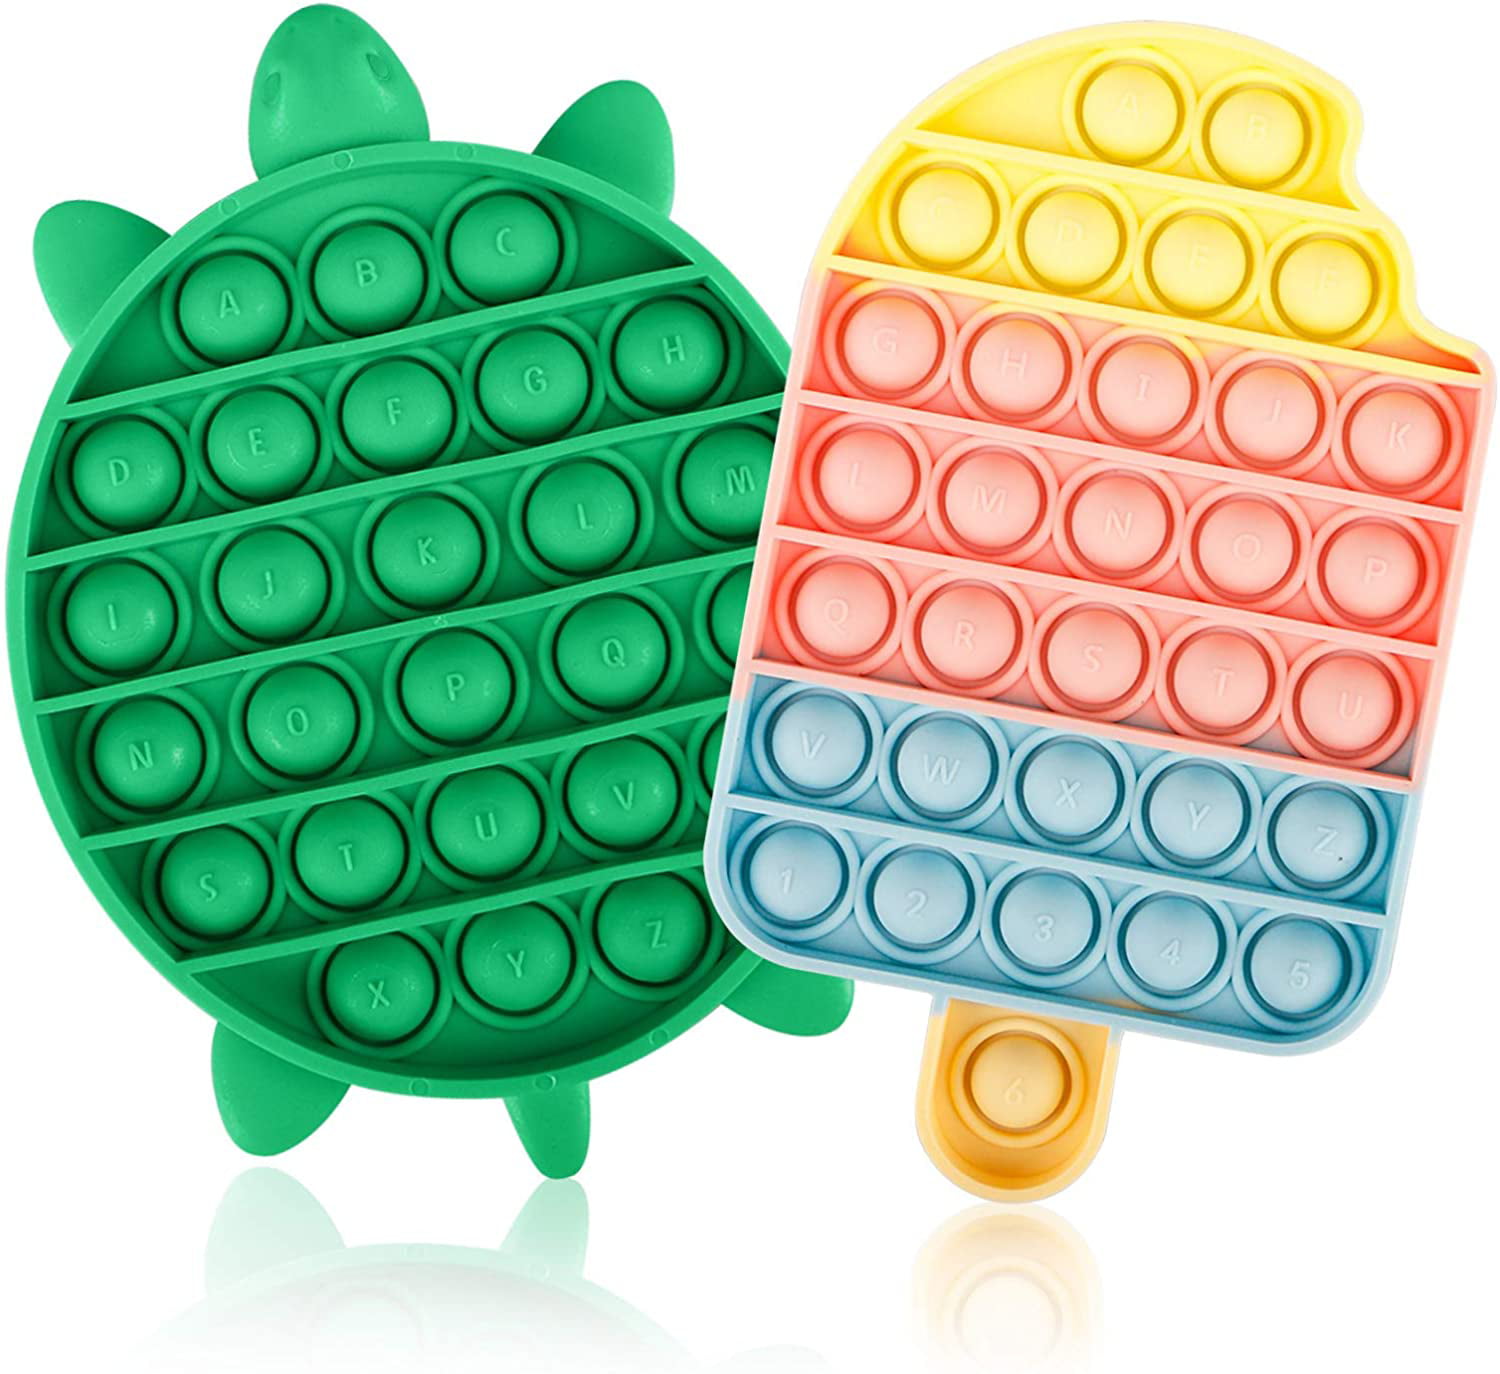 Details about   Push Pop It Bubble Silicone Sensory Fidget Rainbow Toy Autism Stress Relief Game 